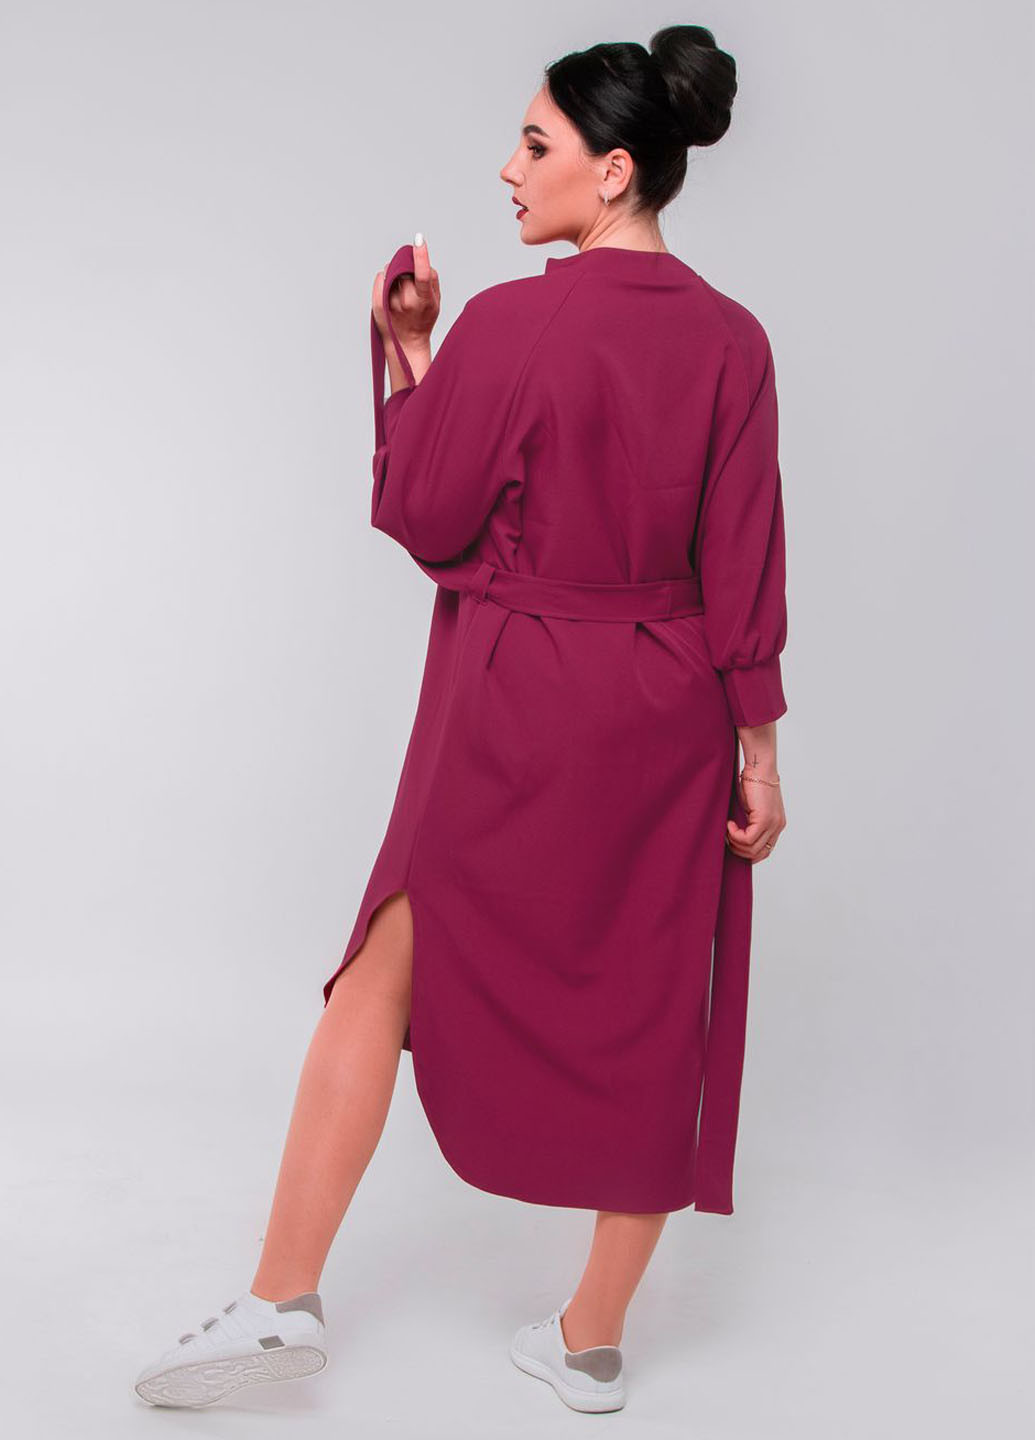 Фиолетовое кэжуал платье-рубашка so-78188-fio рубашка Alpama